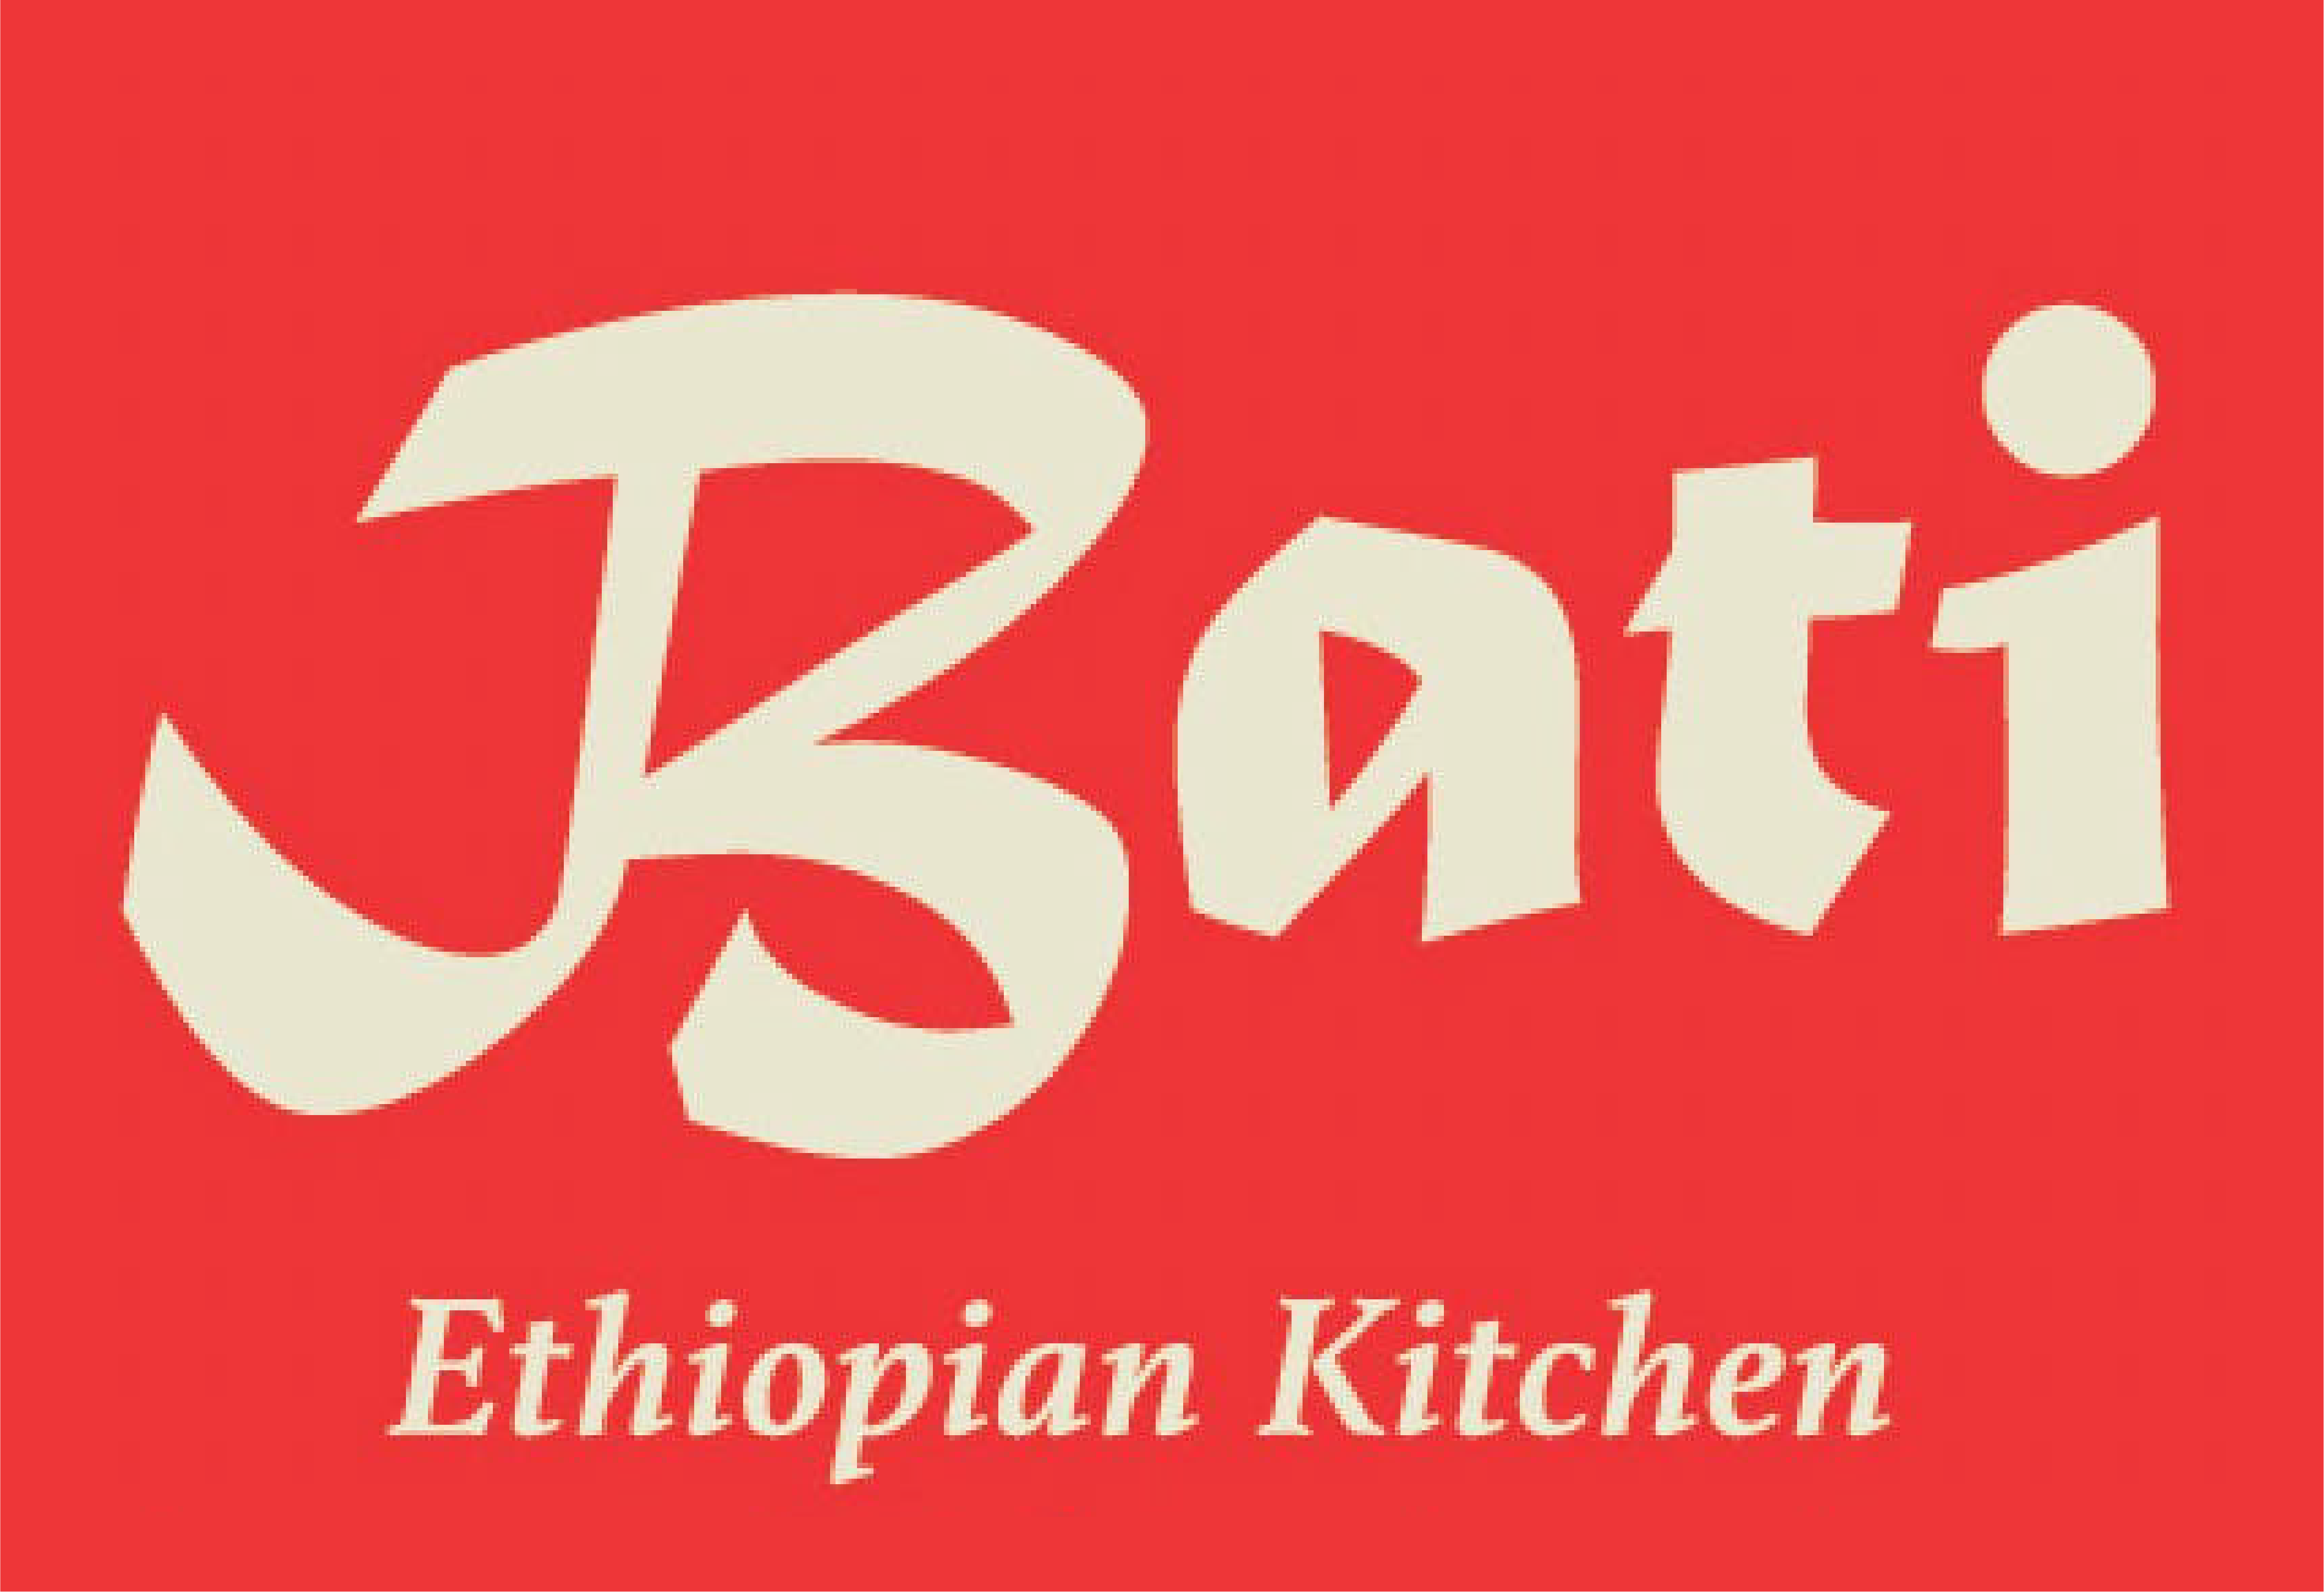 Bati Ethiopian Kitchen Home